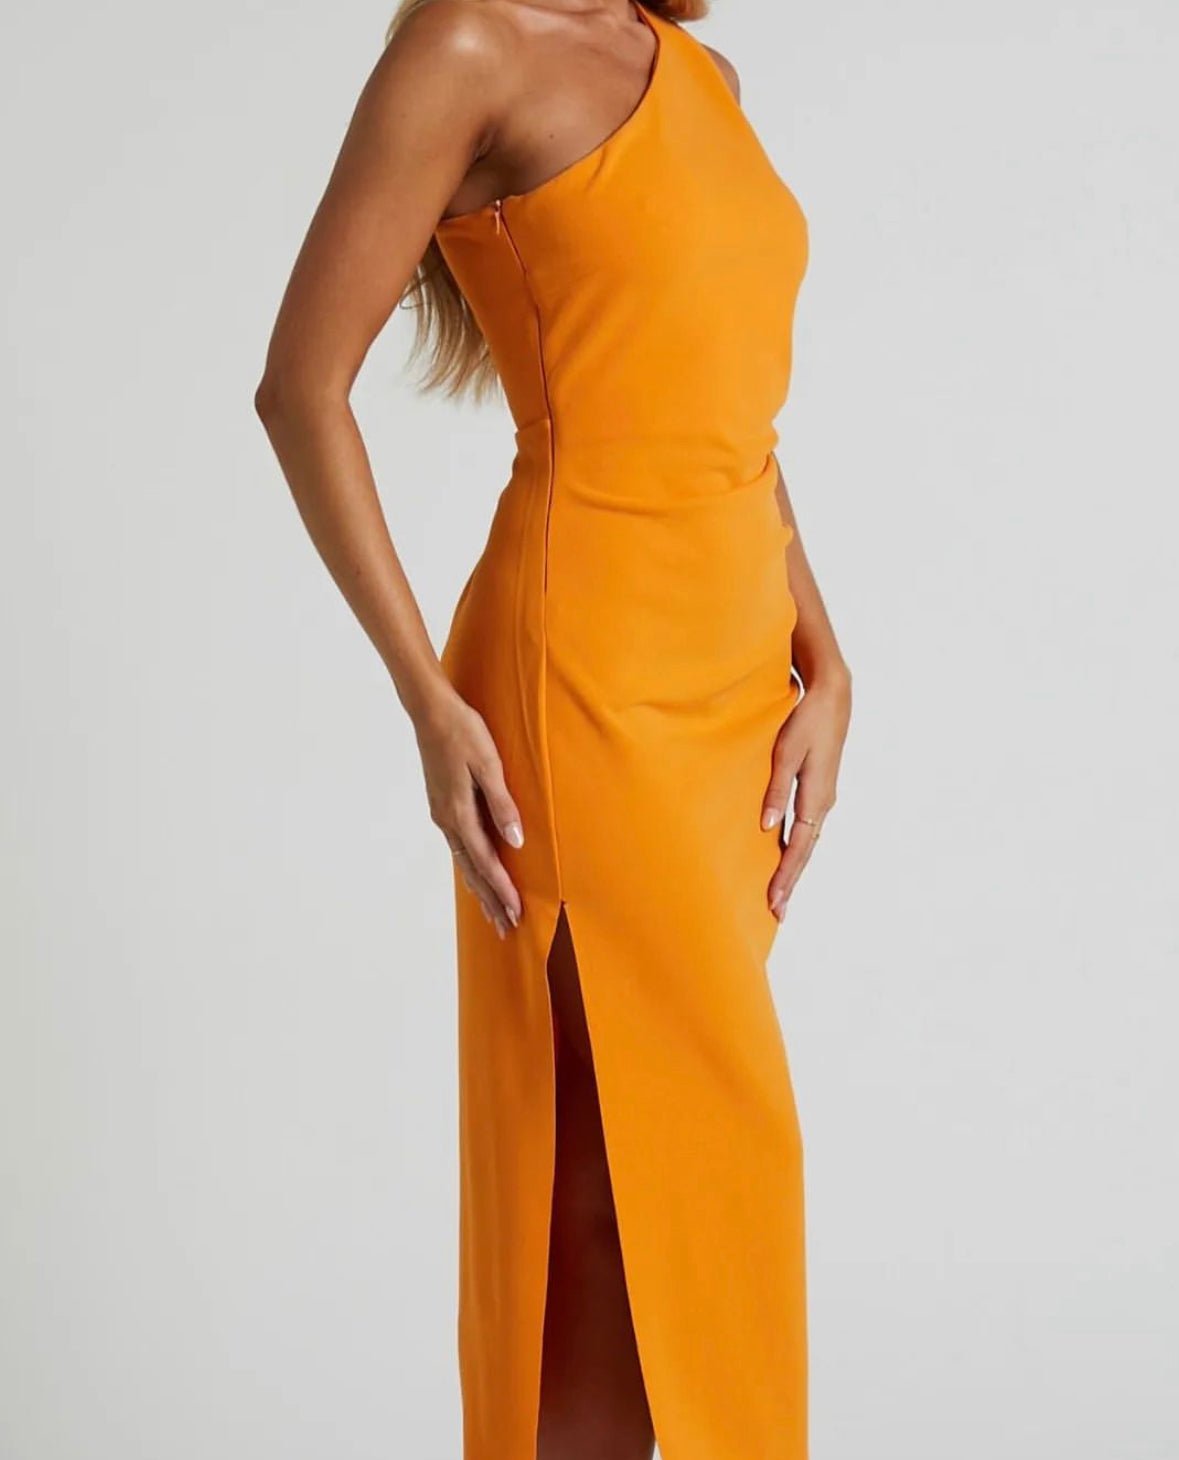 Gia Dress (Orange) - Something For Me​​